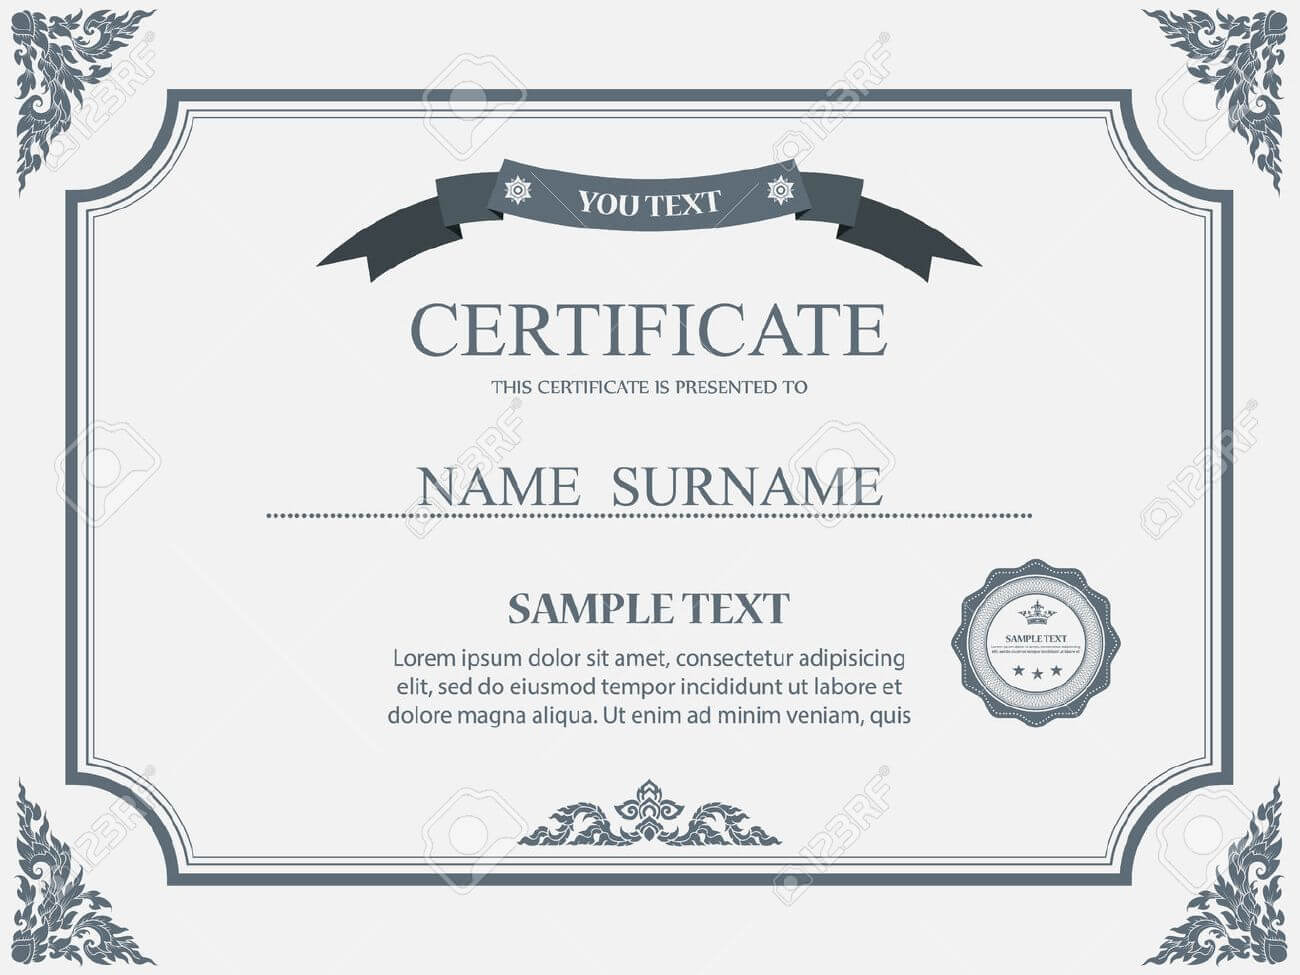 Vector Certificate Template. In Commemorative Certificate Template